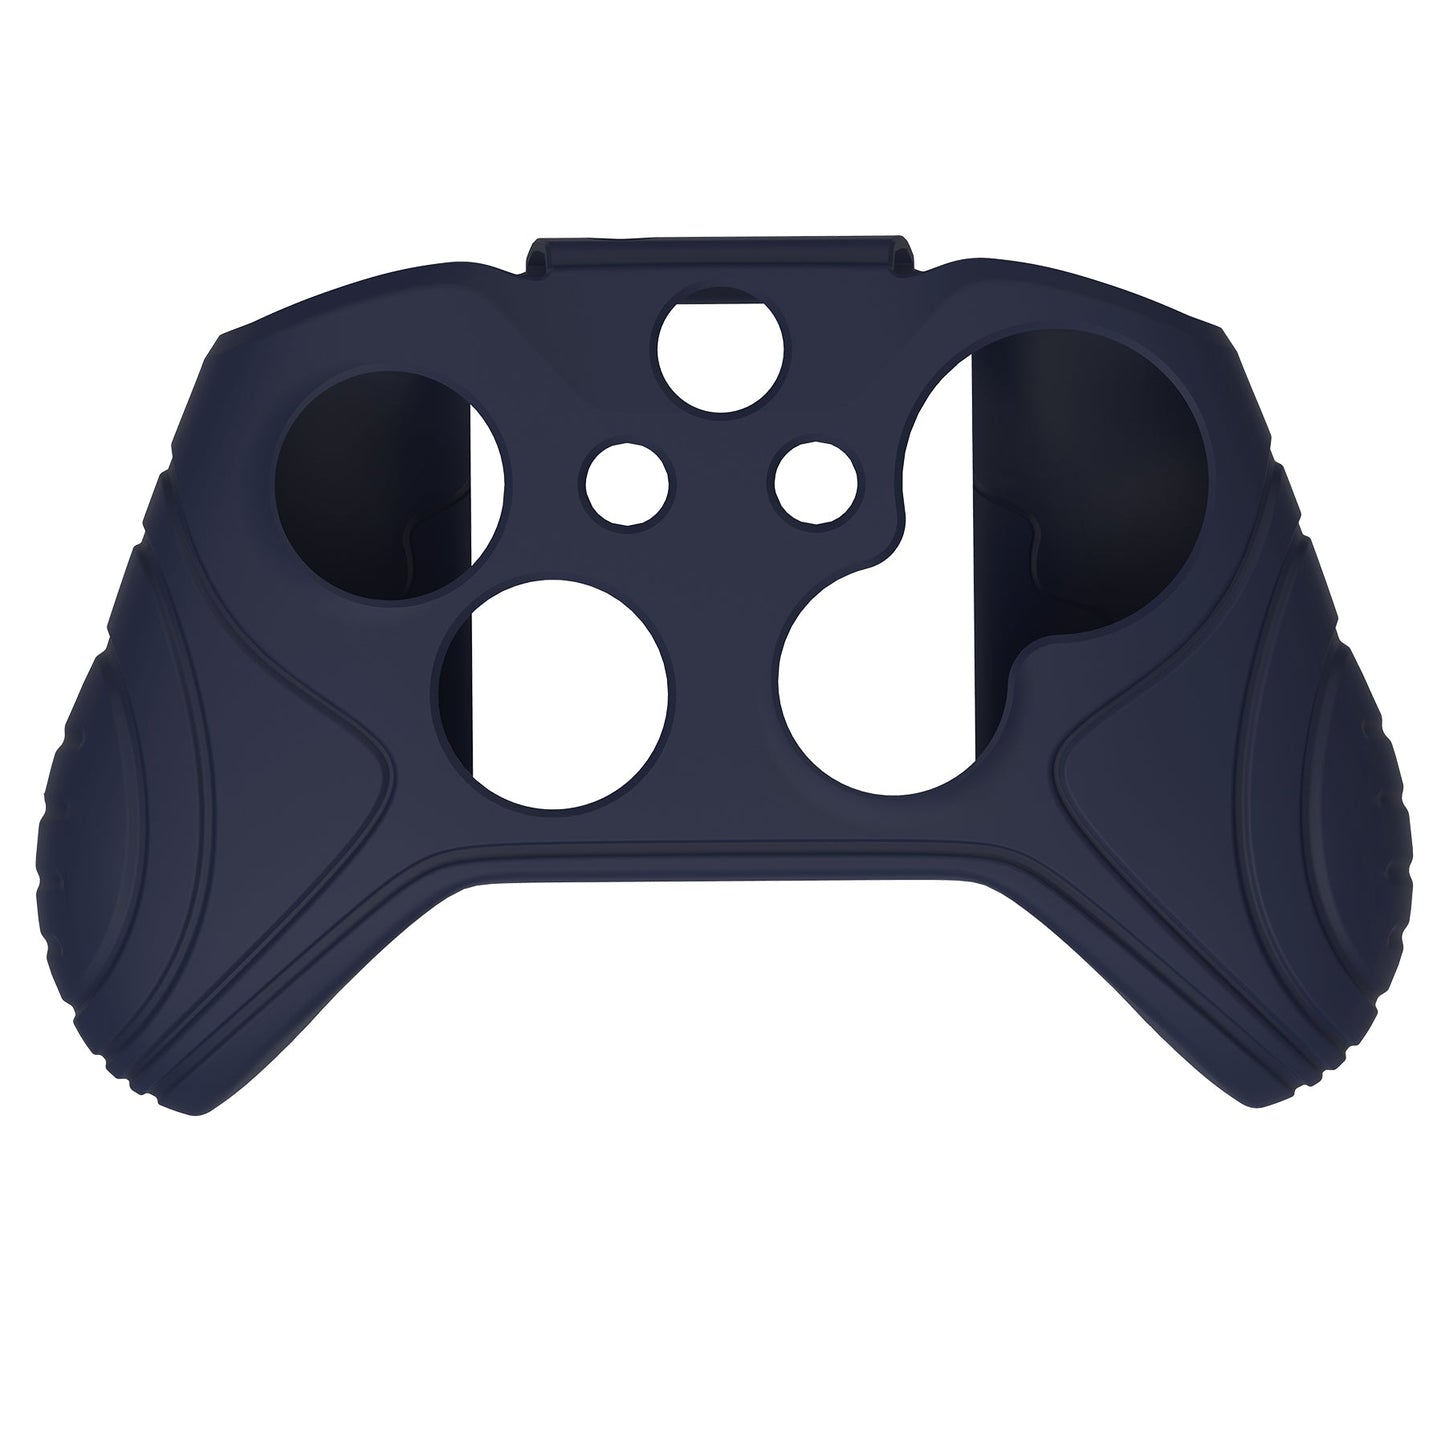 PlayVital Samurai Edition Midnight Blue Anti-Slip Controller Grip Silicone Skin for Xbox One X/S Controller, Ergonomic Soft Rubber Protective Case Cover for Xbox One S/X Controller with Black Thumb Stick Caps - XOQ036 playvital